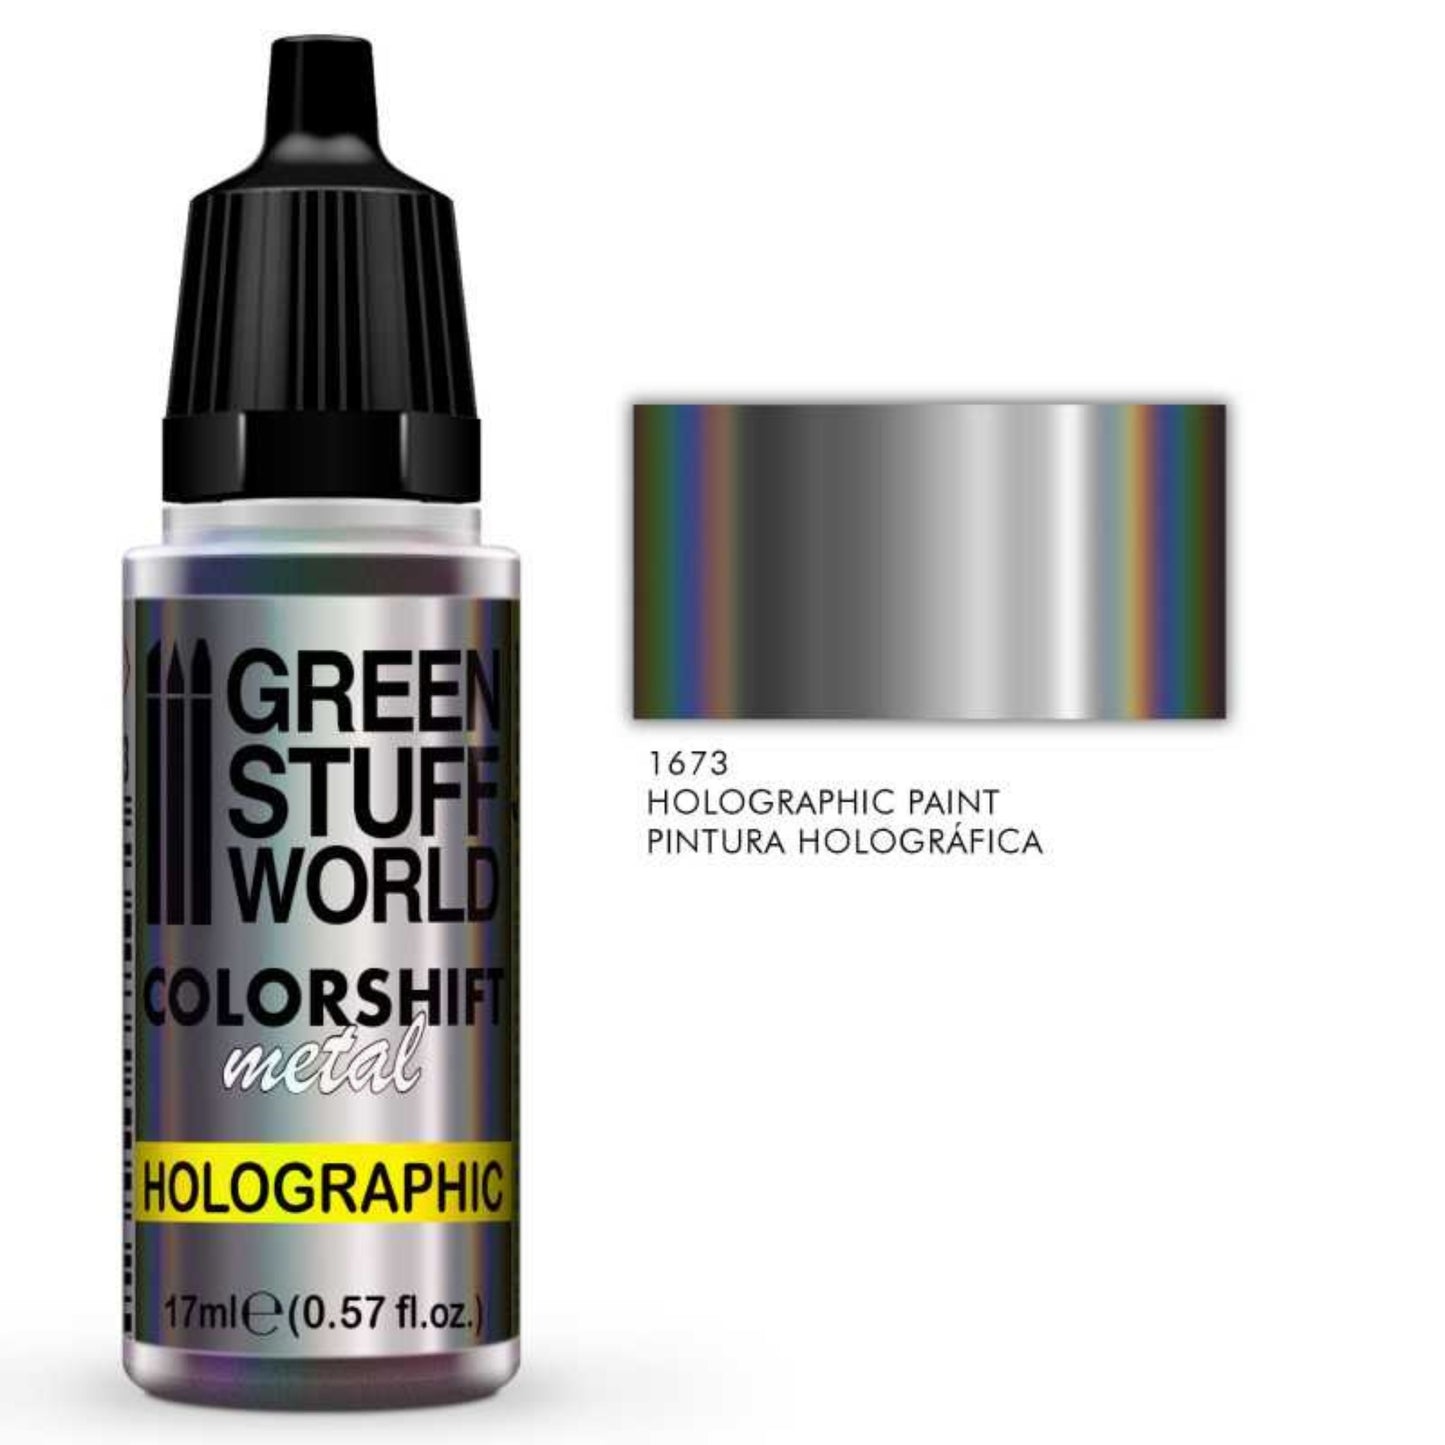 Green Stuff World Colorshift metal - Holographic Lack 17ml